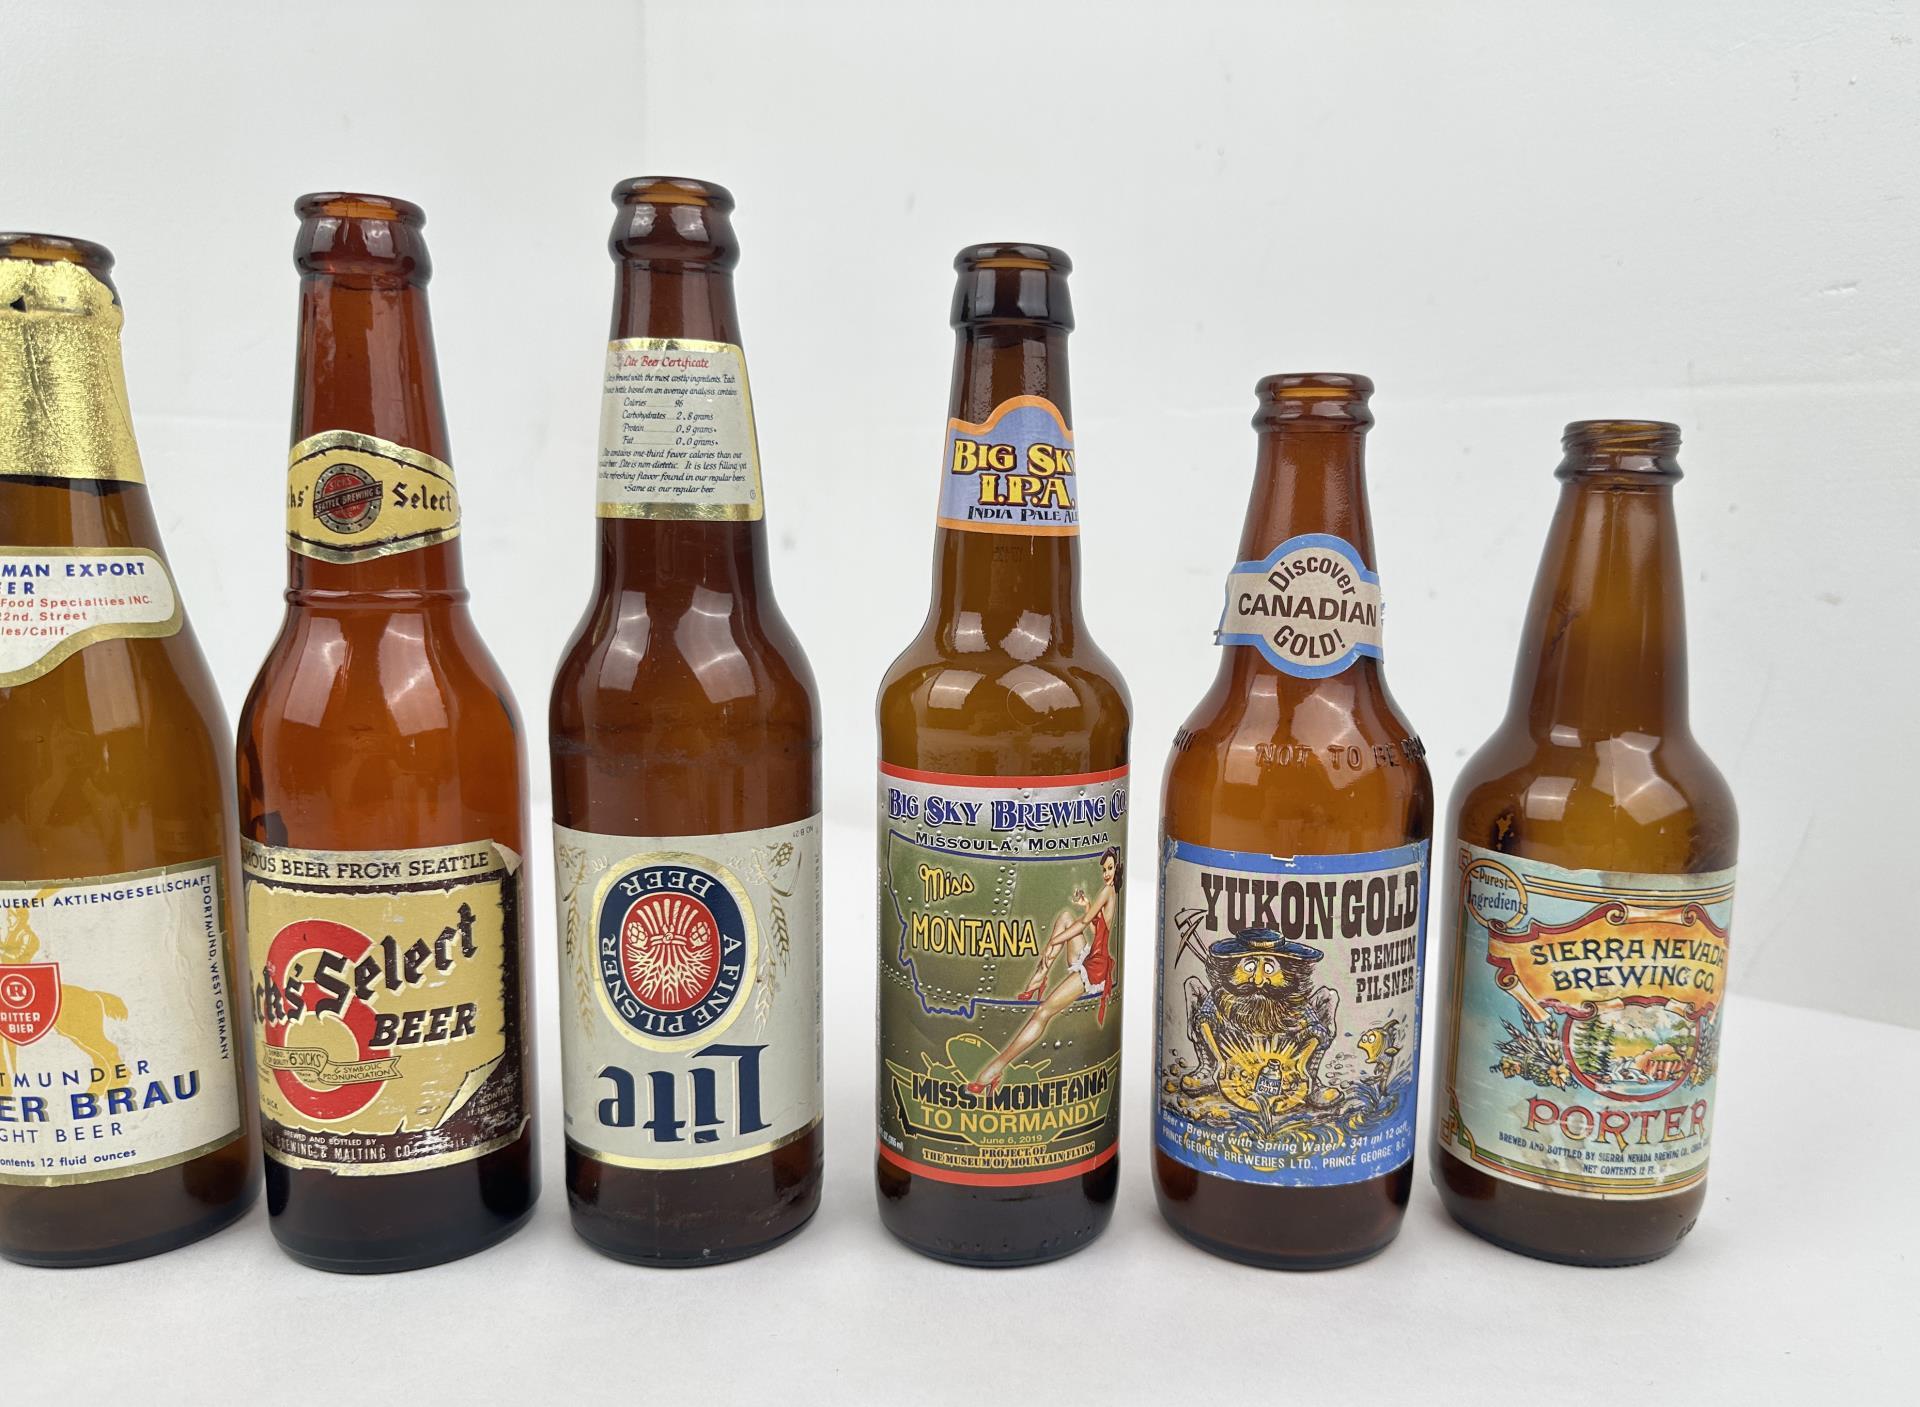 Group of Vintage Beer Bottles